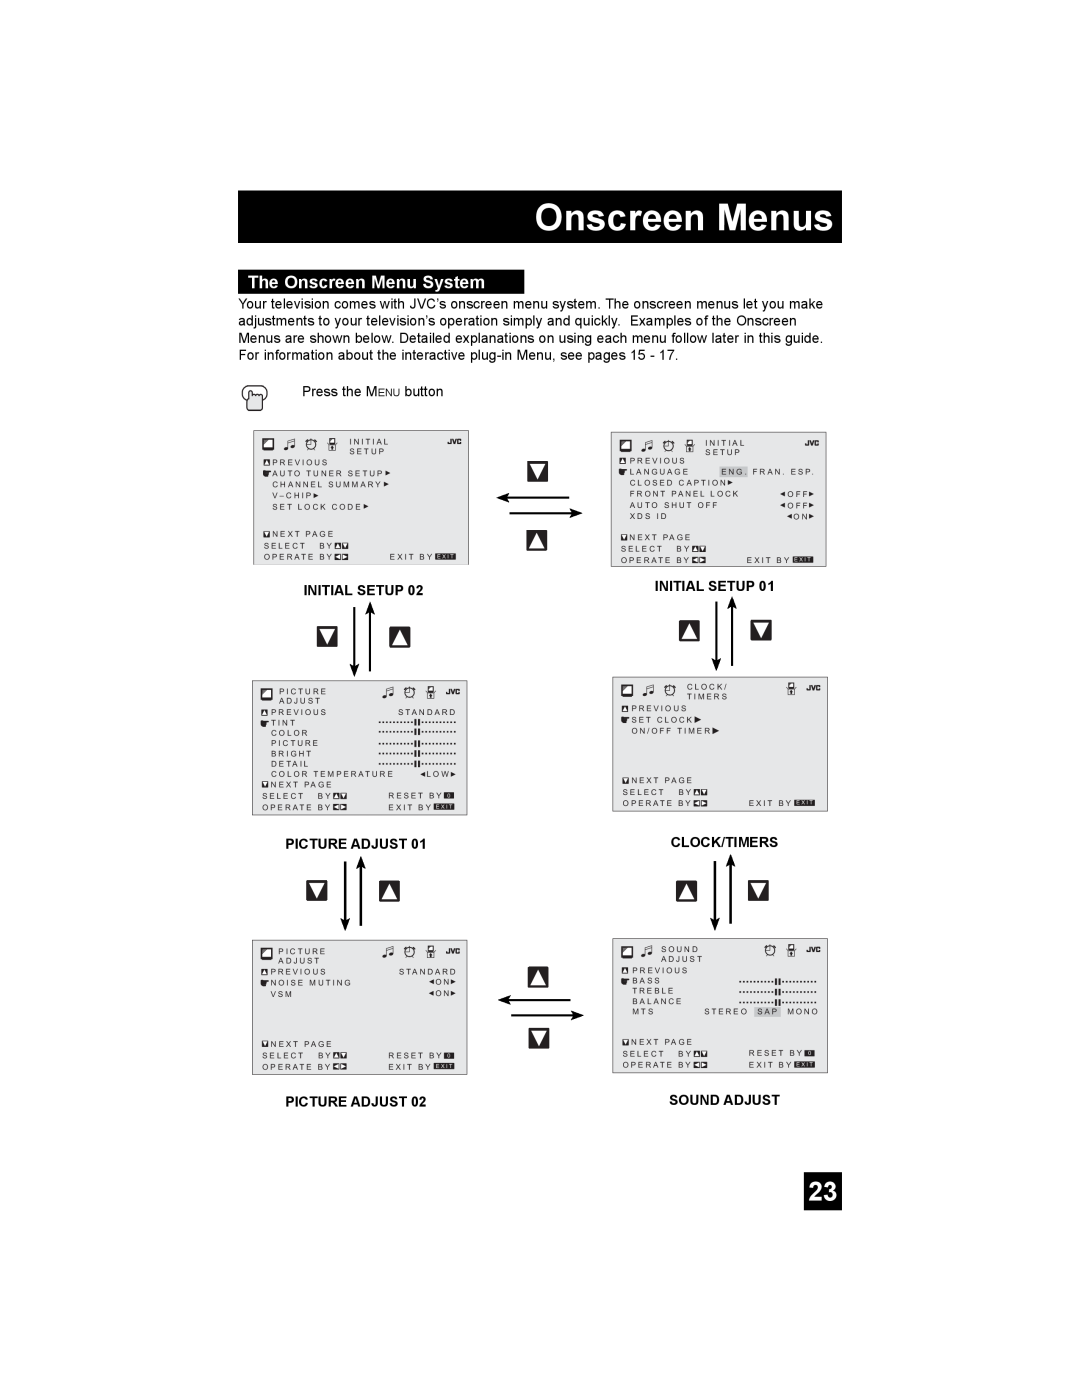 JVC AV 20FA44 manual The Onscreen Menu System, Onscreen Menus, Press the MENU button 